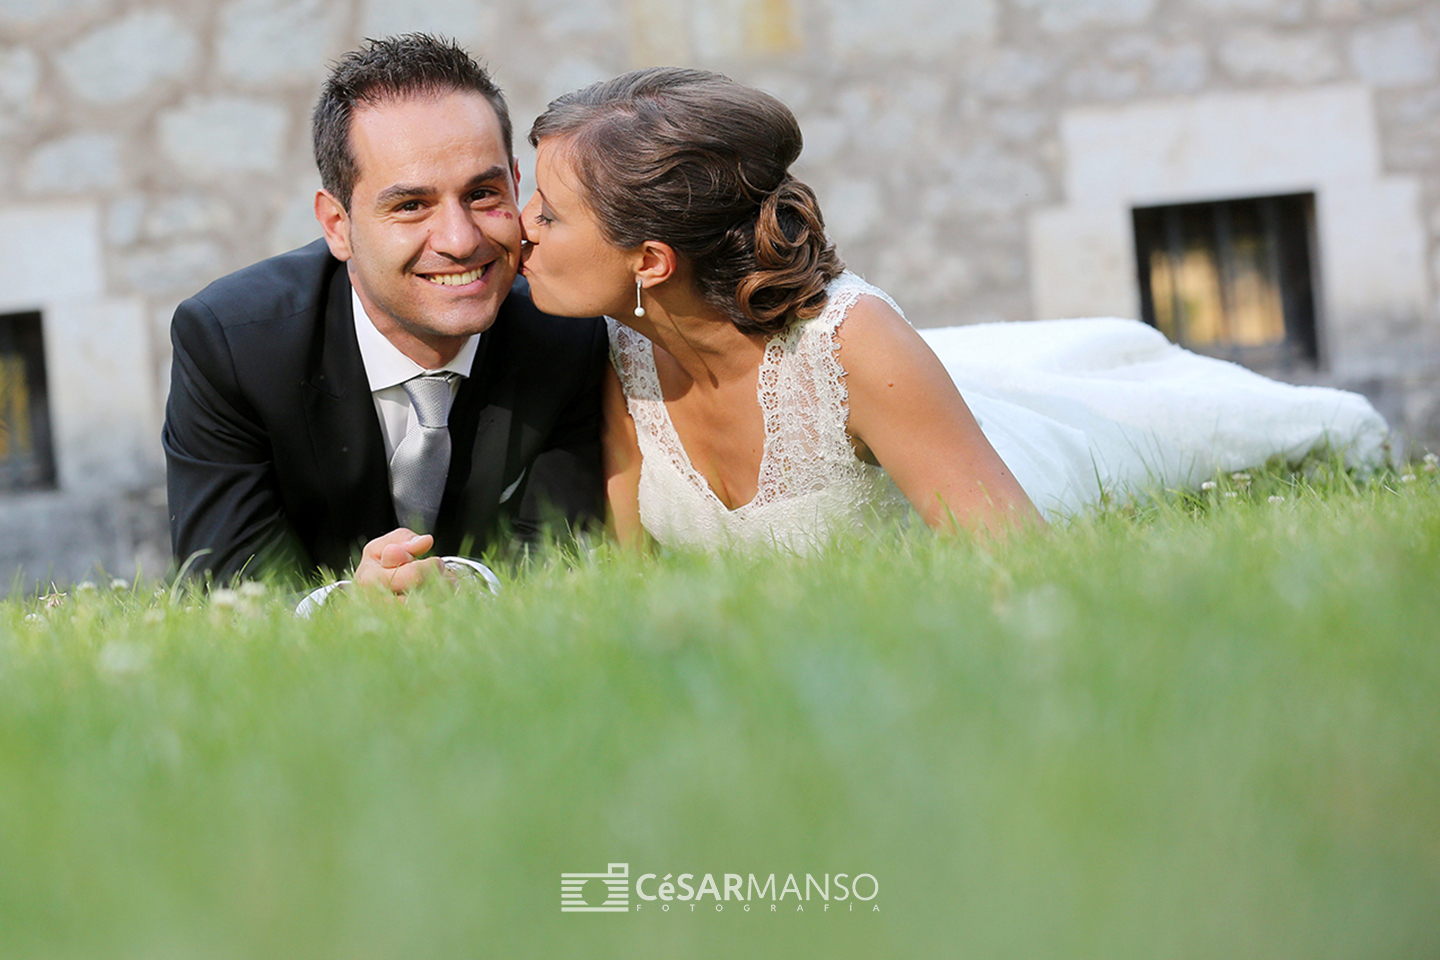 César Manso Fotógrafo: Fotógrafos de boda en Burgos - Boda%20AlejandrayJairo-32.JPG